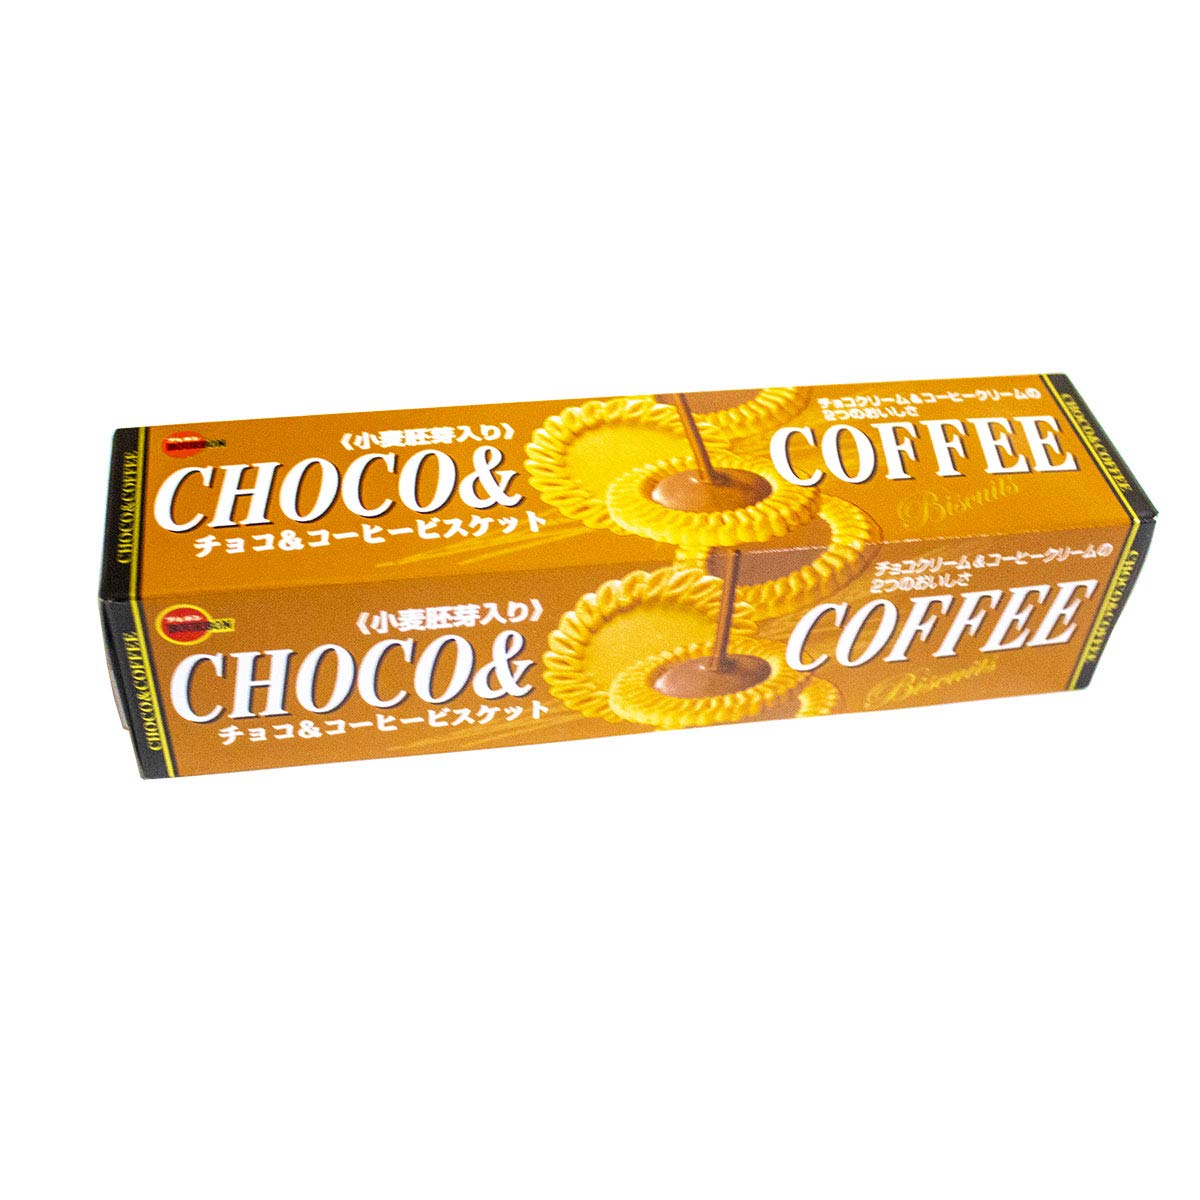 Bourbon Choco&Coffee Biscuit บิสกิตจากญี่ปุ่น ช็อกโกแลตและกาแฟ ขนาด 108g